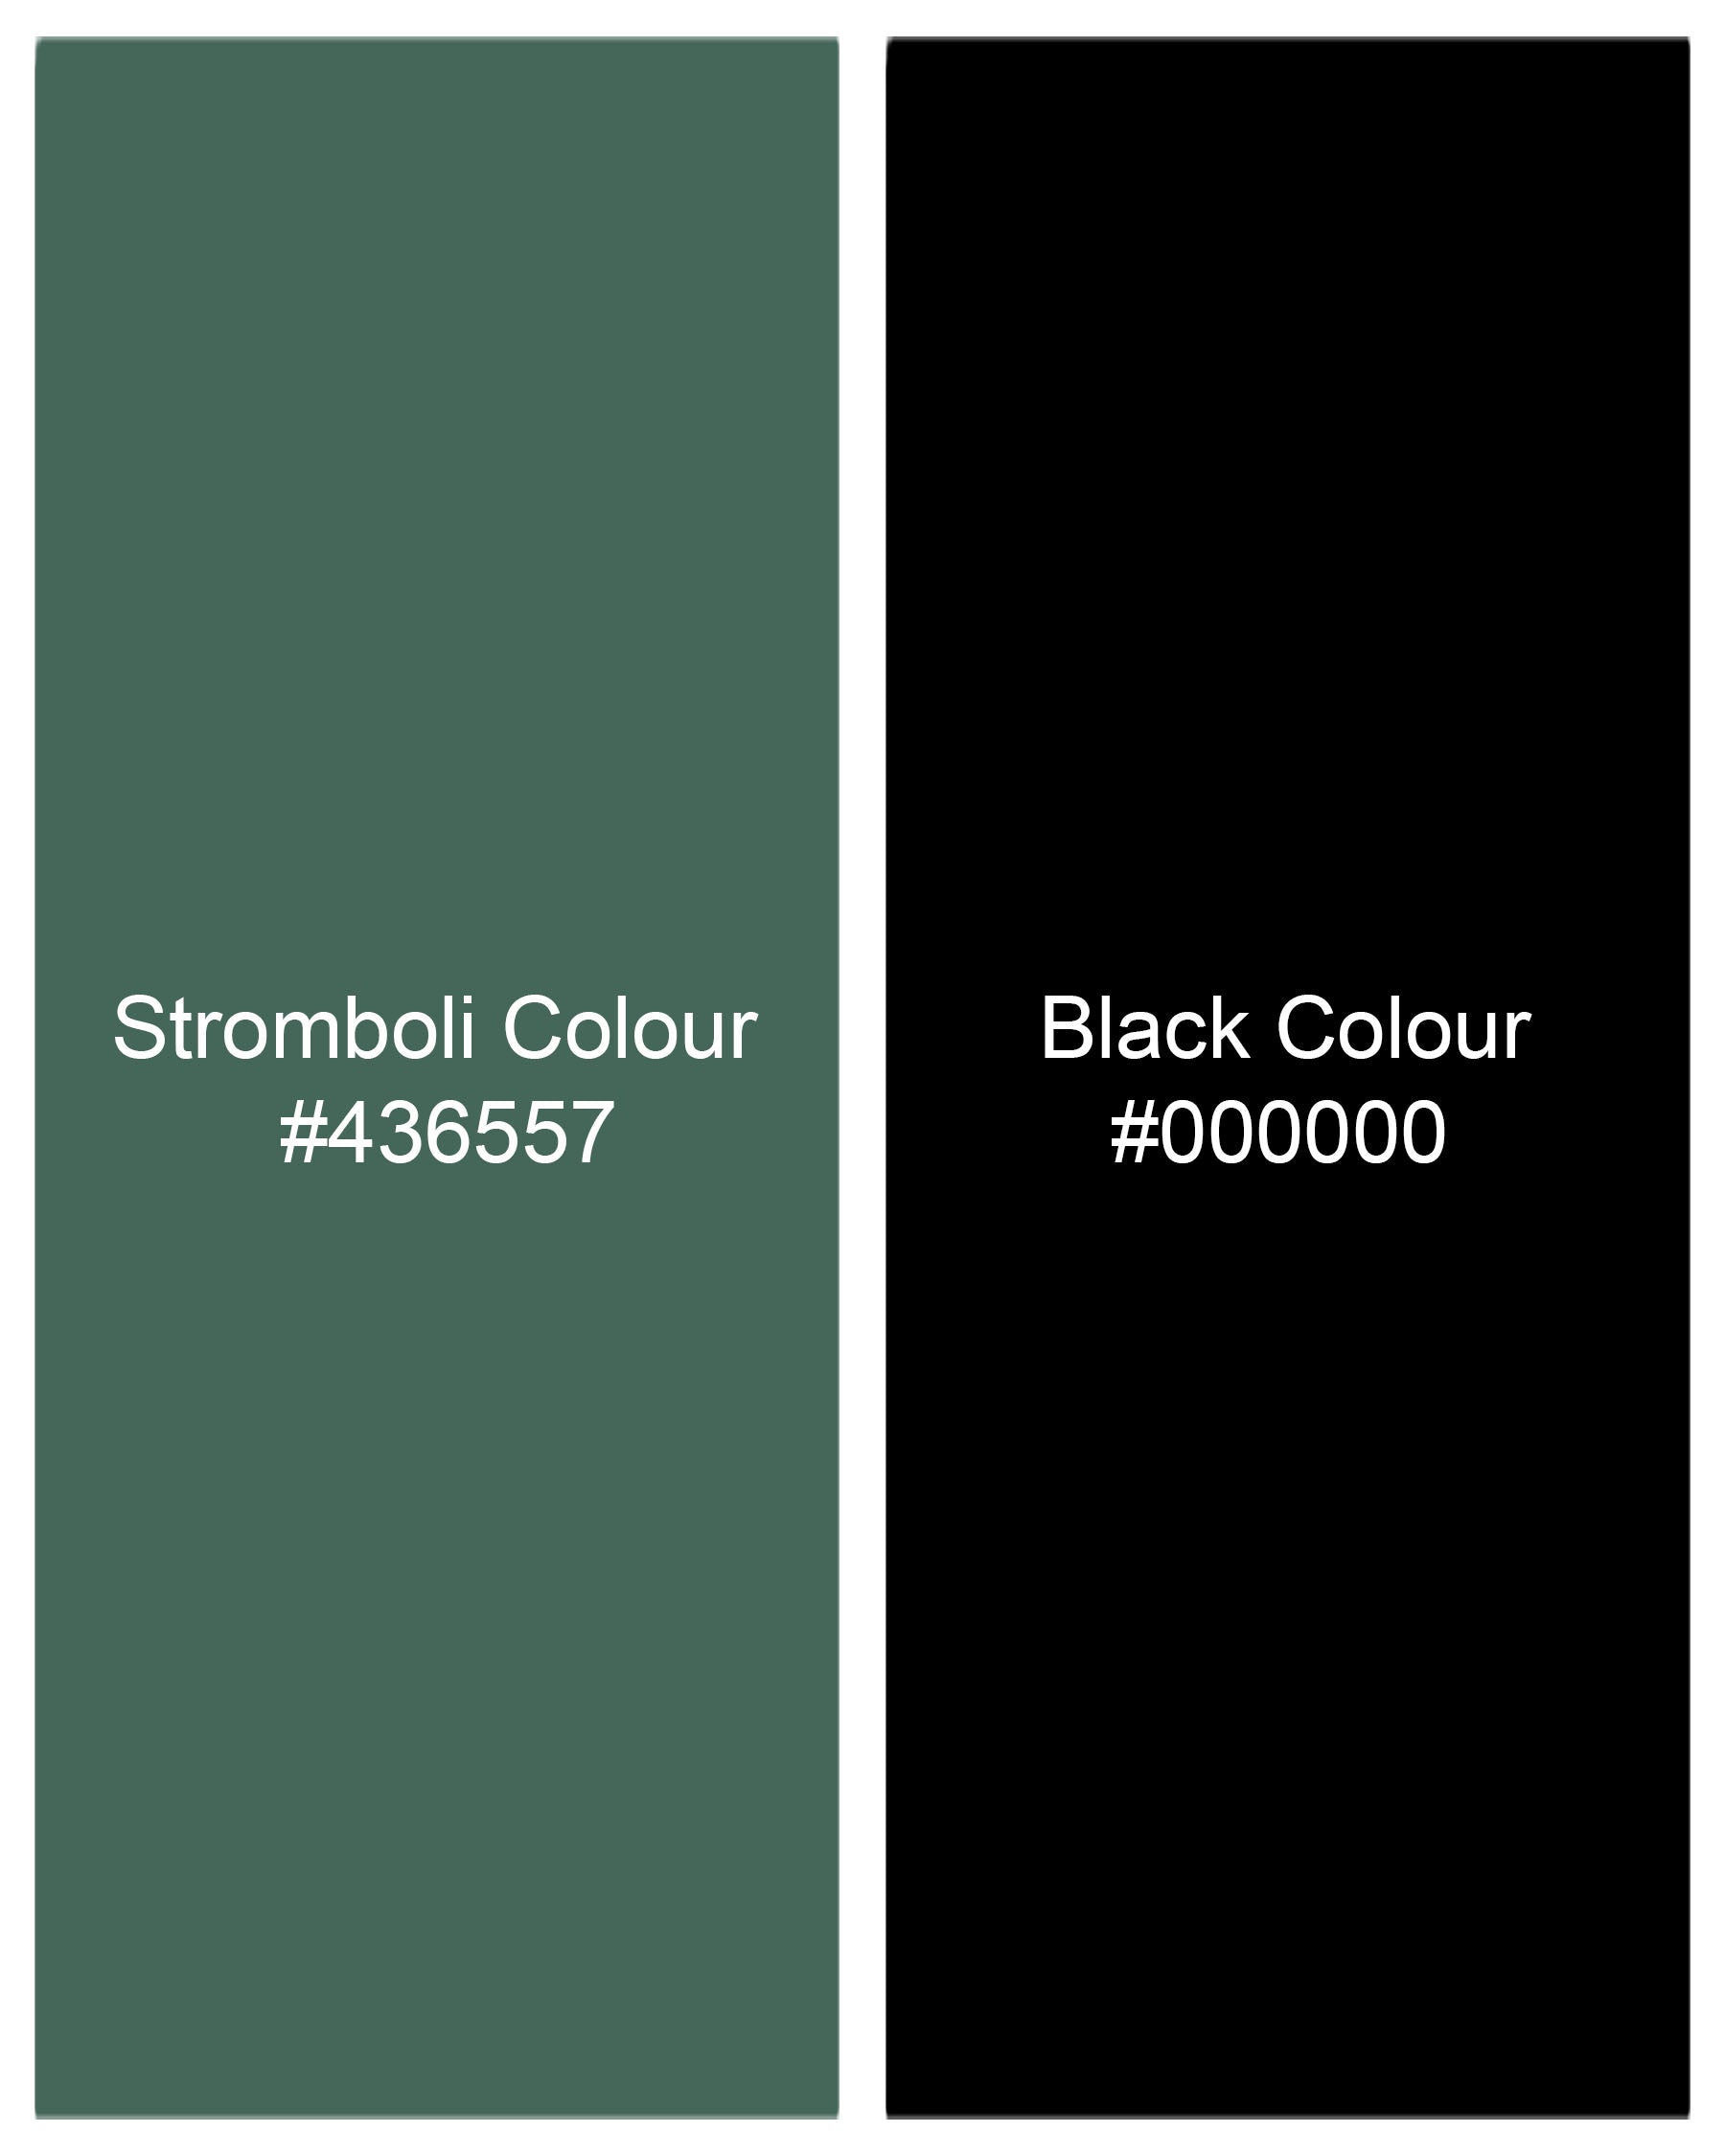 Stromboli Green and Jade Black Printed Premium Cotton Shirt 7781-BD-GR-38, 7781-BD-GR-H-38, 7781-BD-GR-39,7781-BD-GR-H-39, 7781-BD-GR-40, 7781-BD-GR-H-40, 7781-BD-GR-42, 7781-BD-GR-H-42, 7781-BD-GR-44, 7781-BD-GR-H-44, 7781-BD-GR-46, 7781-BD-GR-H-46, 7781-BD-GR-48, 7781-BD-GR-H-48, 7781-BD-GR-50, 7781-BD-GR-H-50, 7781-BD-GR-52, 7781-BD-GR-H-52